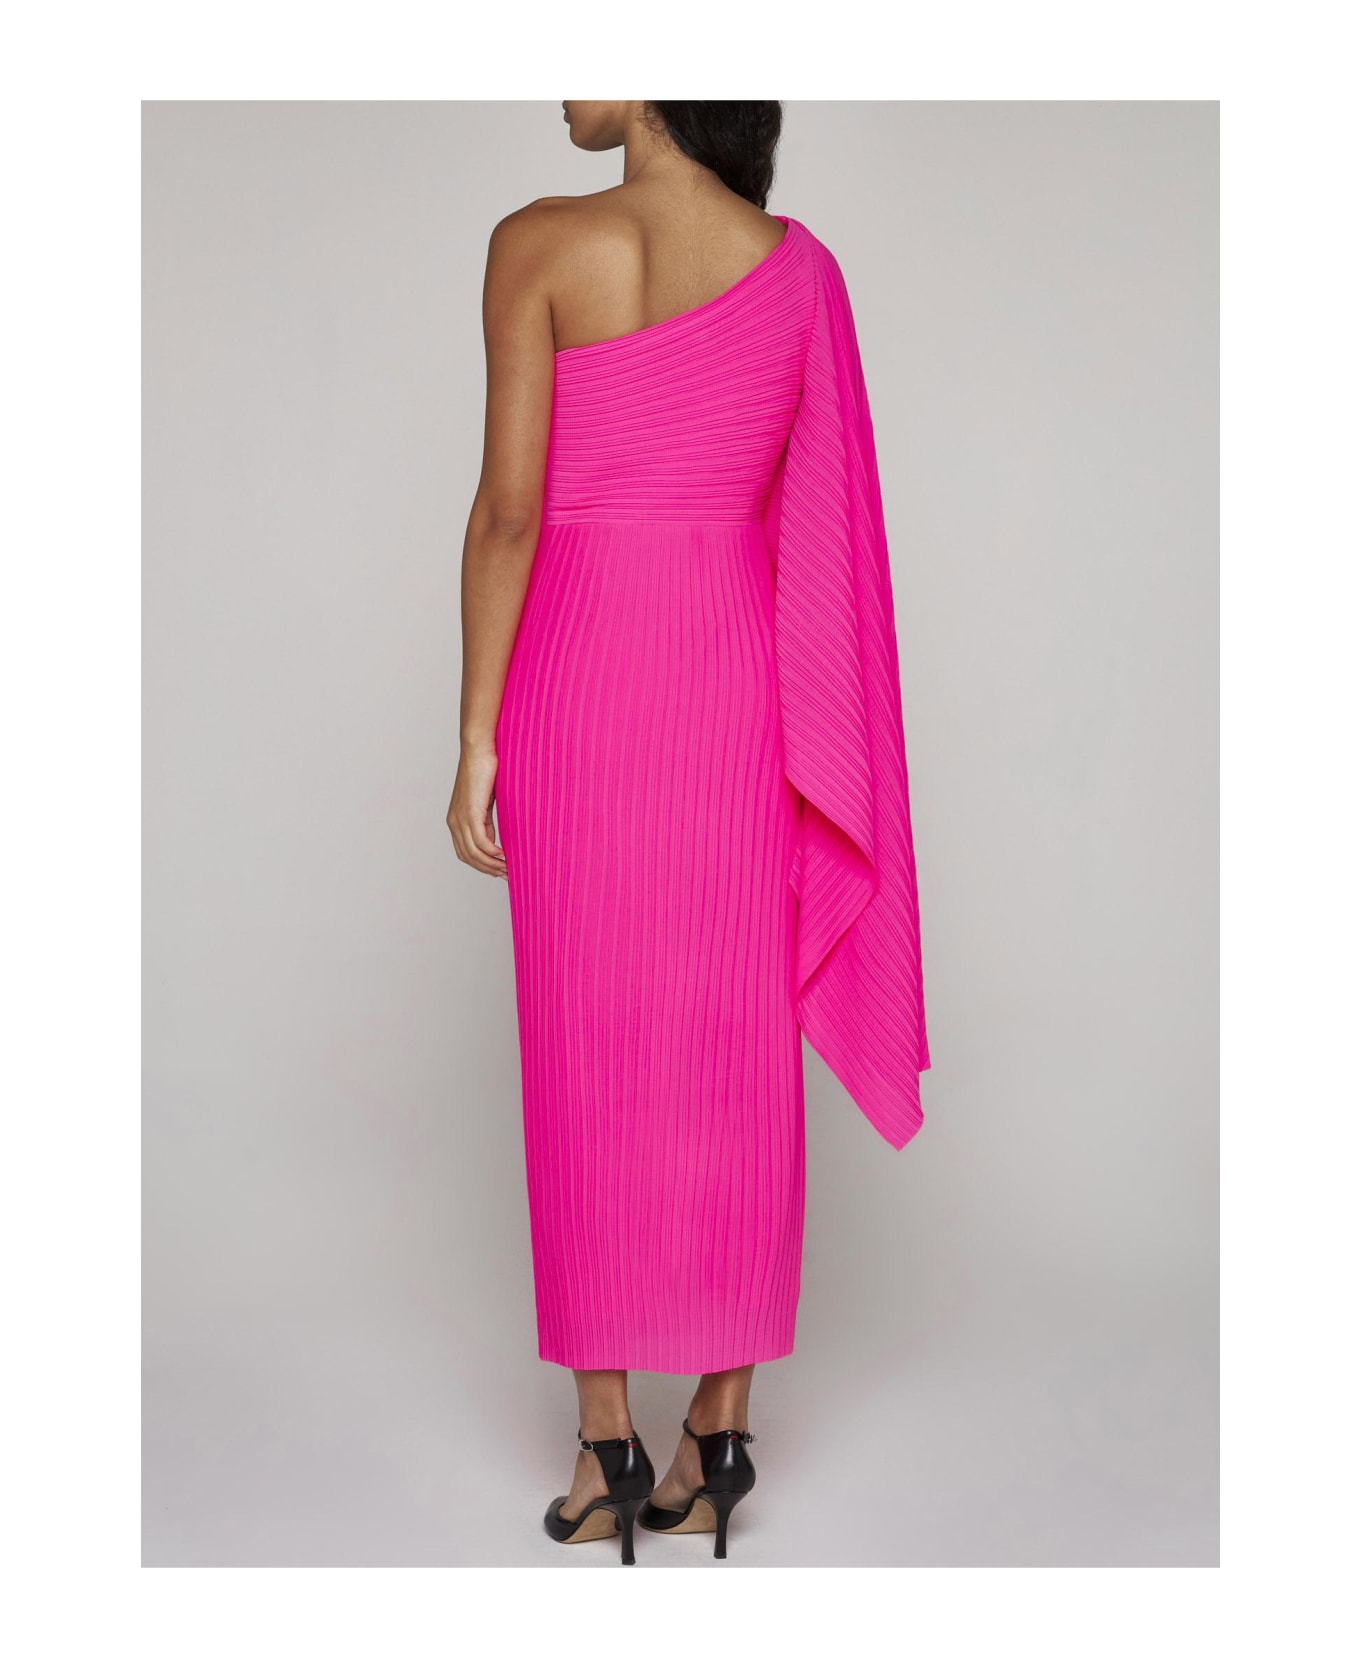 Solace London Lenna Pleated Crepe Midi Dress - Hot pink